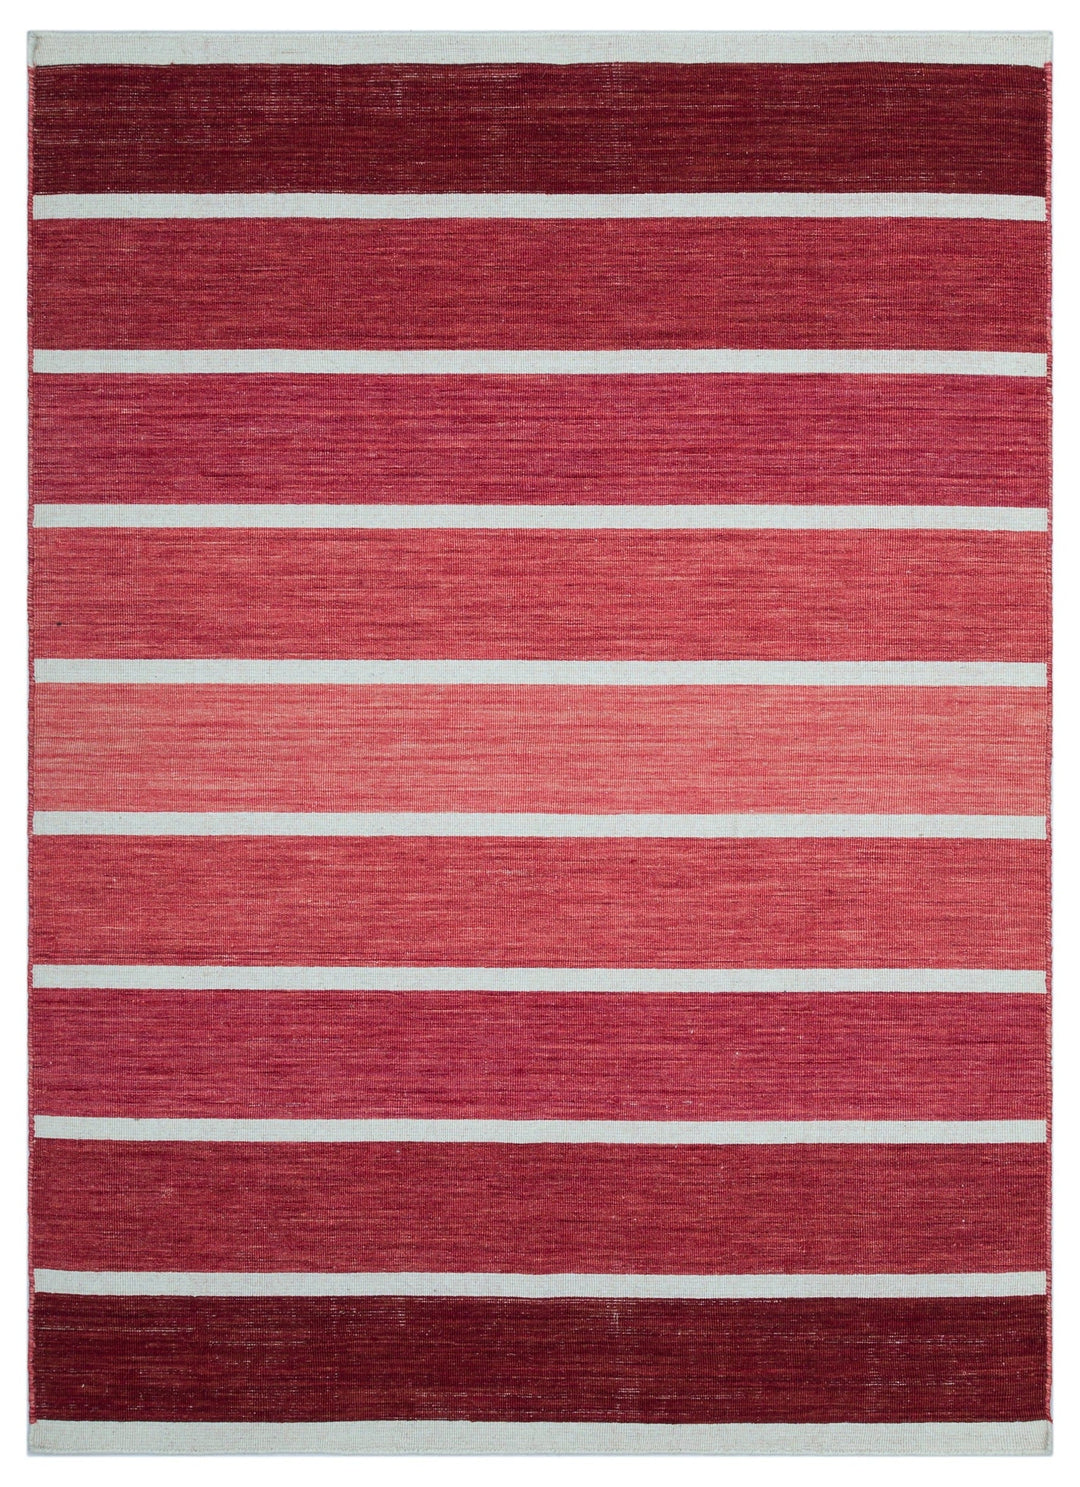 Cretan Red Striped Wool Hand Woven Carpet 128 x 180